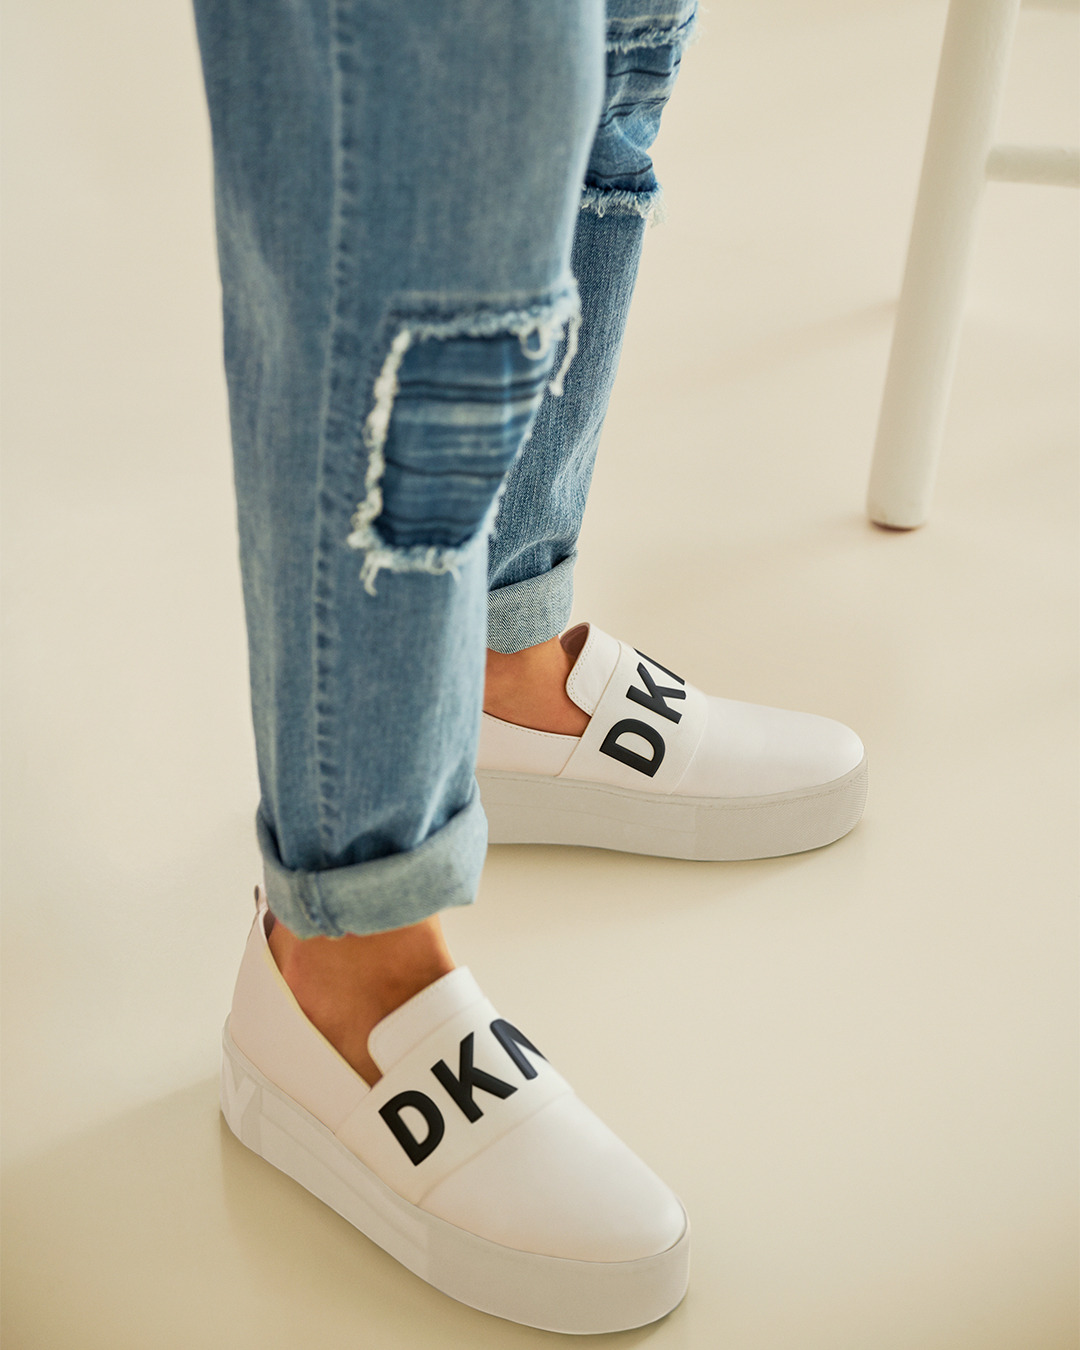 DKNY's Nostalgic Platform Sneaker